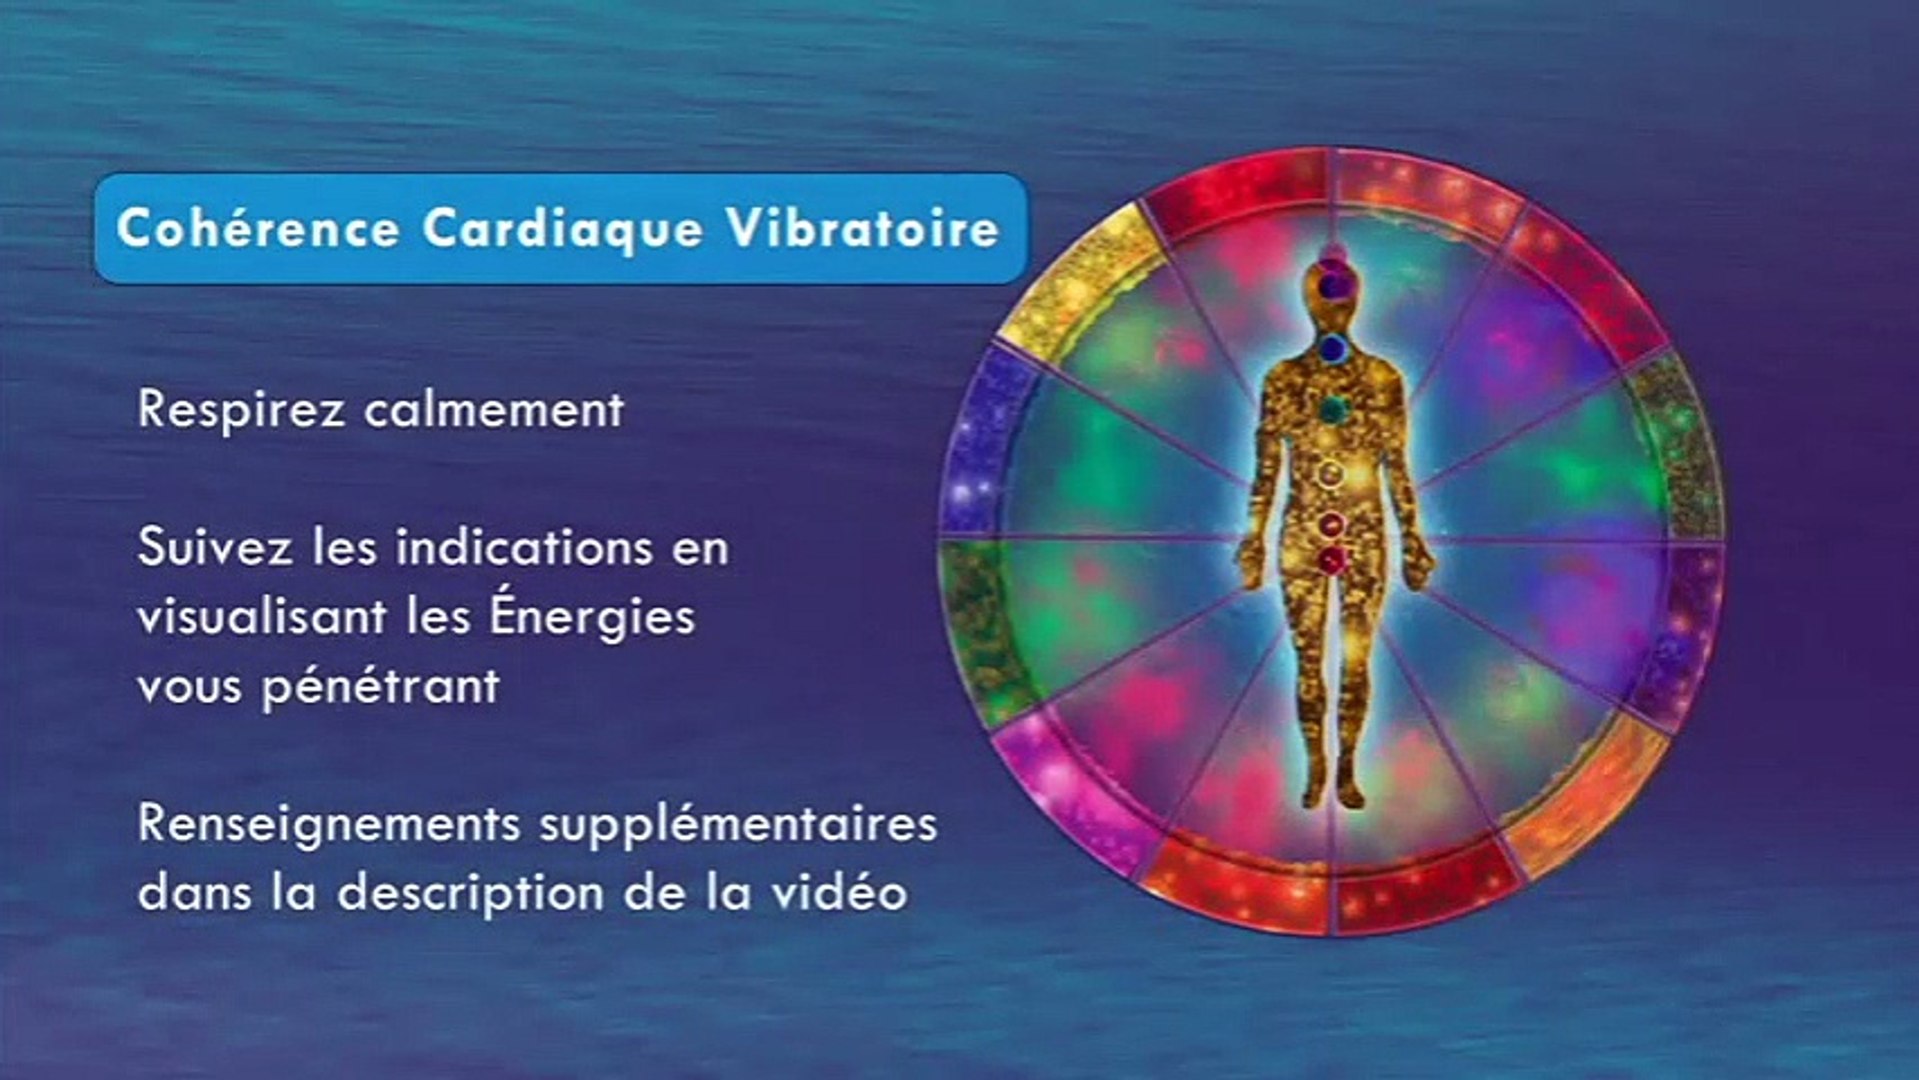 Cohérence Cardiaque Vibratoire Sonore - Exercice de Respiration - 5 minutes  - Vidéo Dailymotion